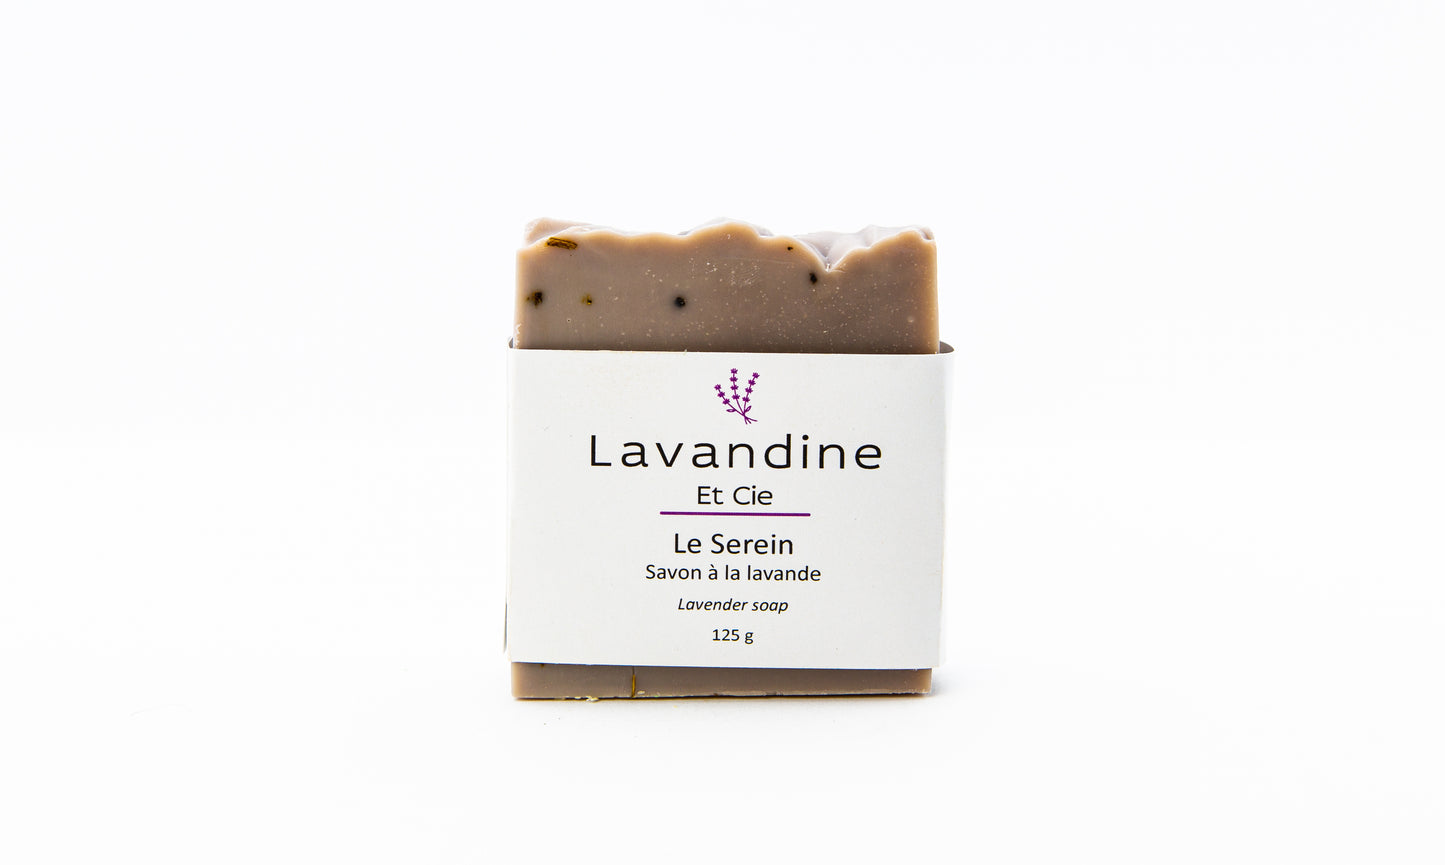 Le Serein - Lavender soap